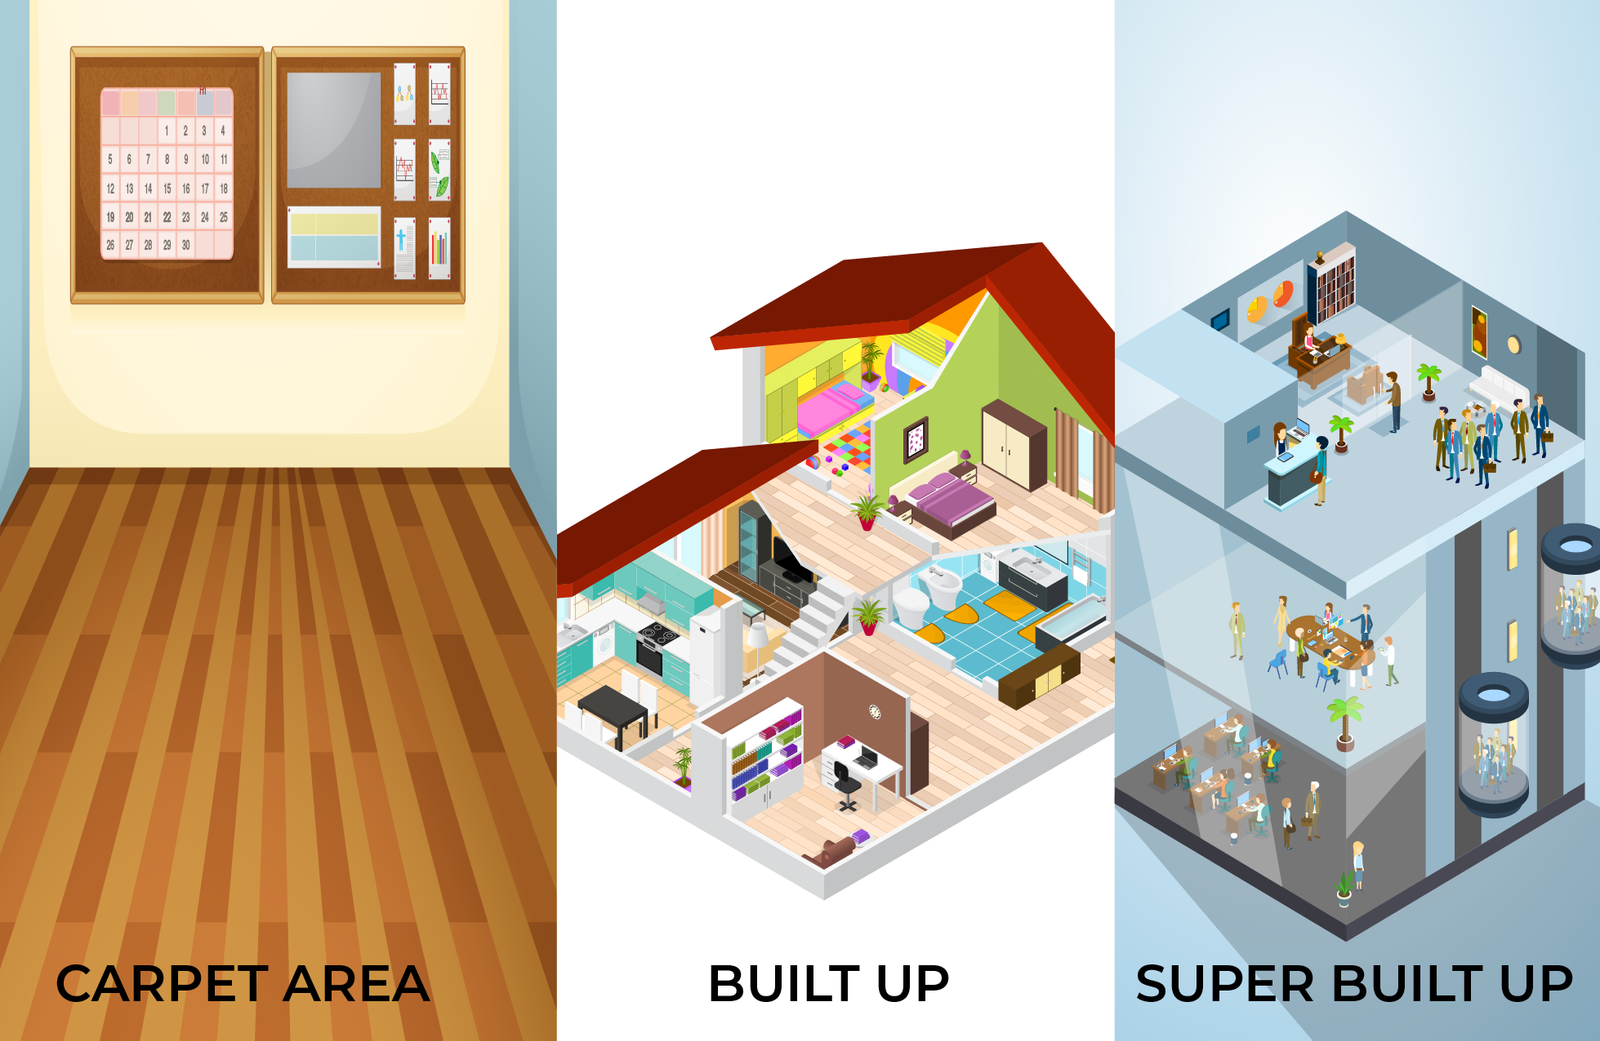 carpet area | built up area | super built up area